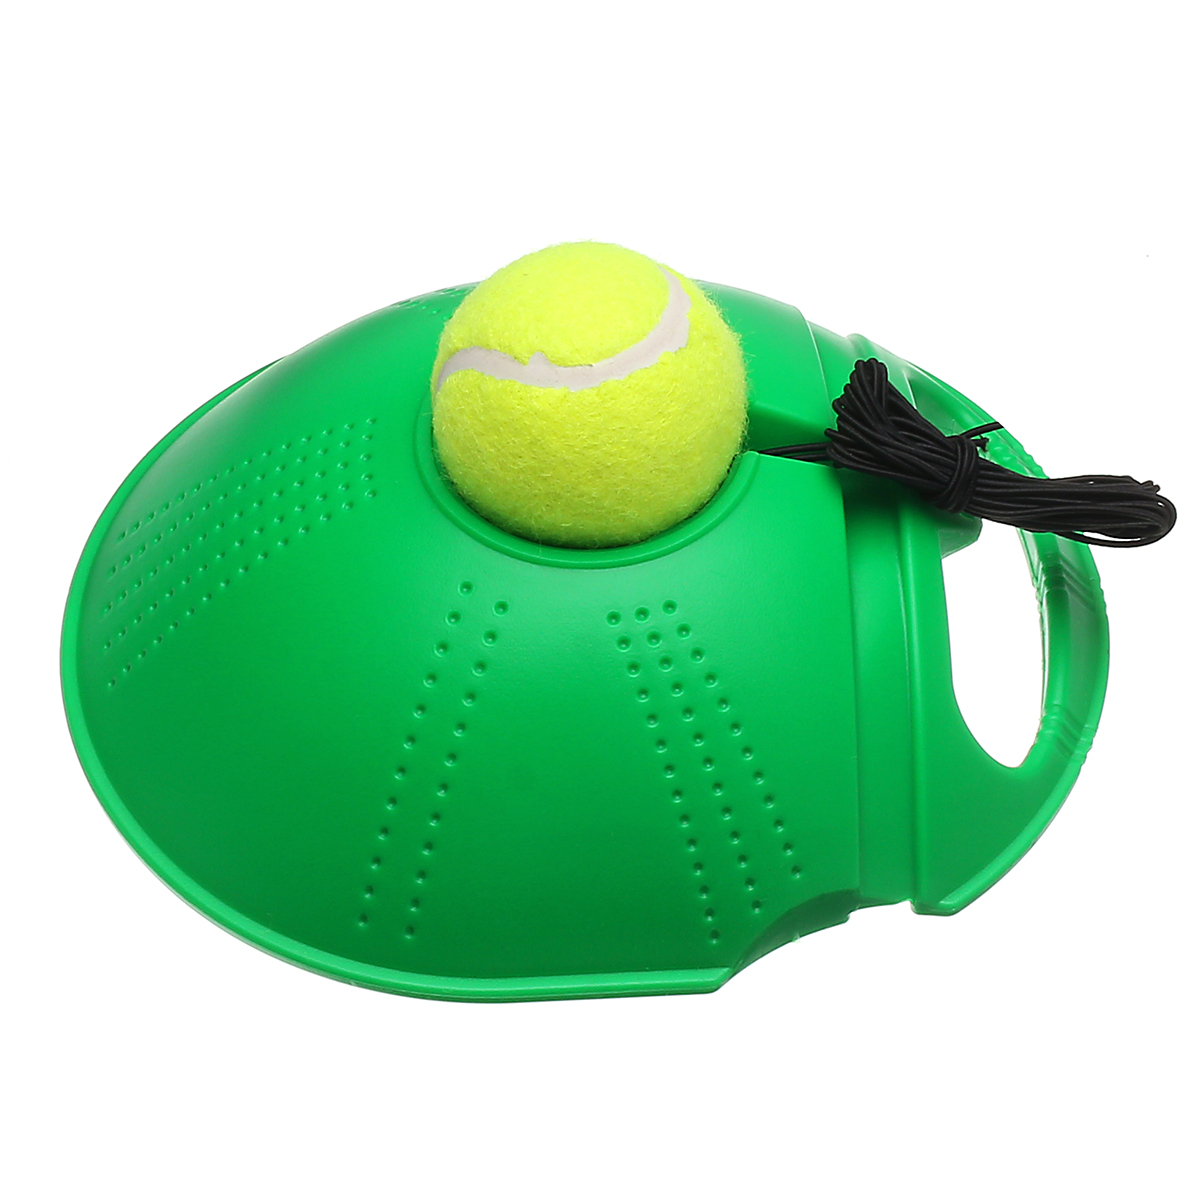 Tennis-Training-Tool-Rebound-Trainer-Self-study-Exercise-Ball-Baseboard-Holder-1305524